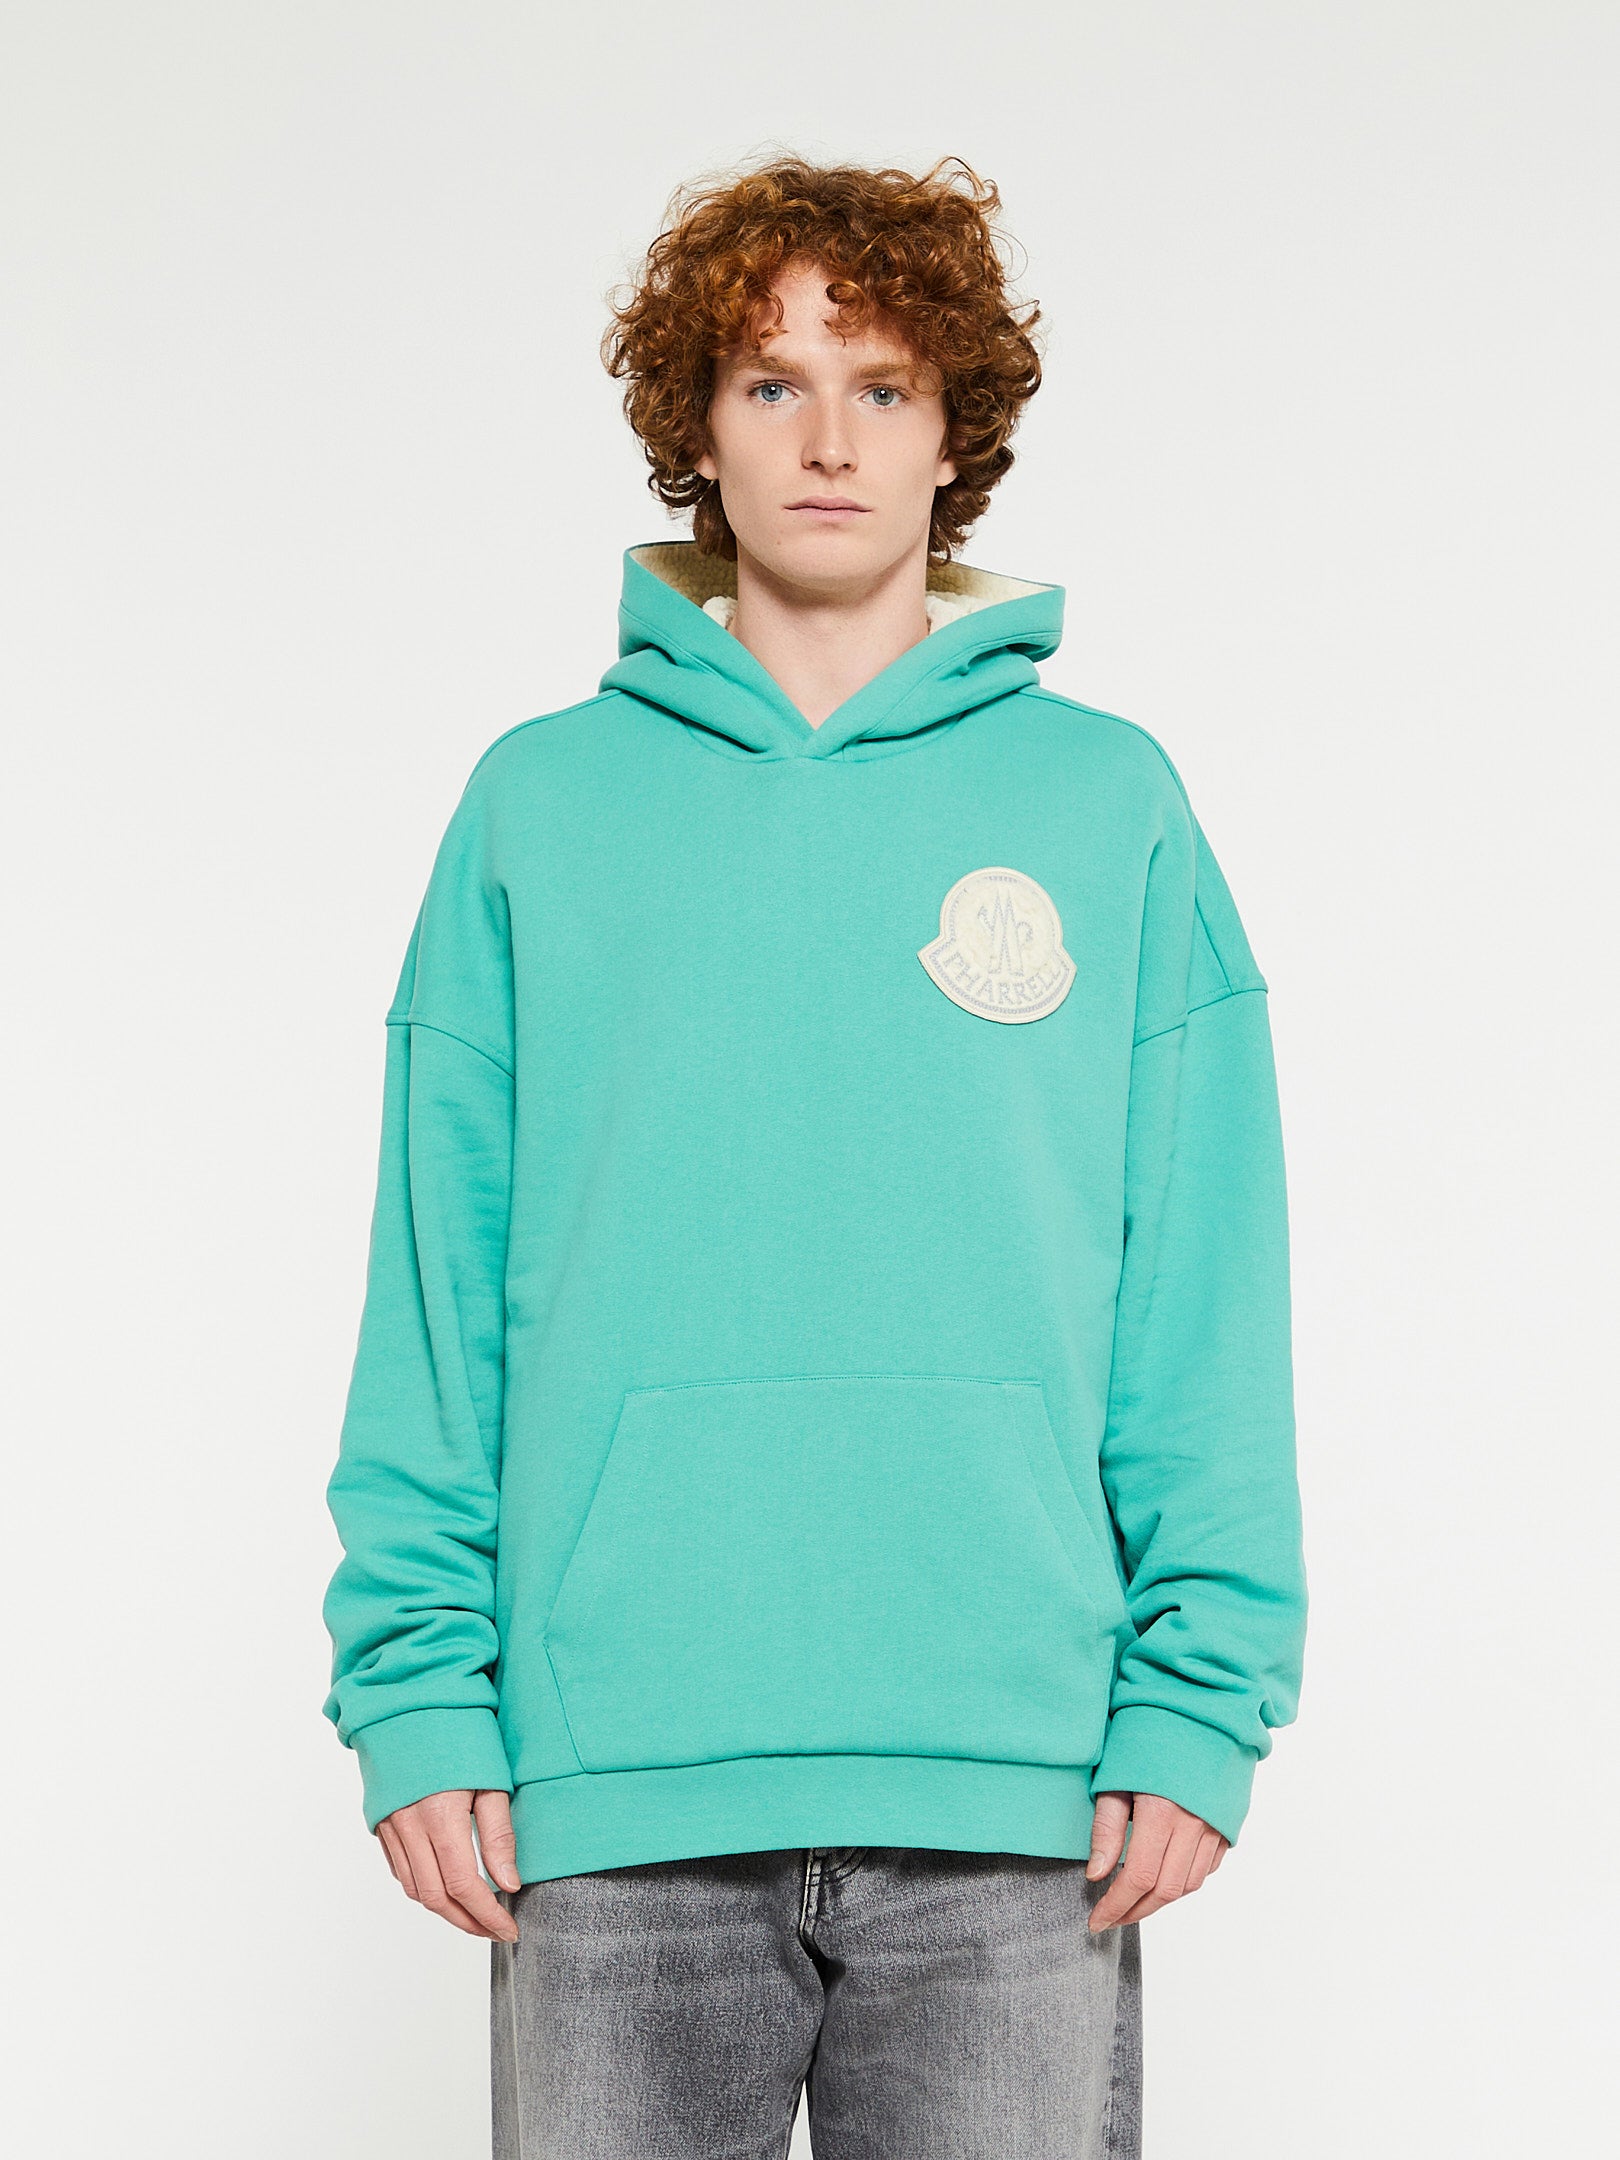 Moncler Genius x Pharrell Williams - Hoodie Sweatshirt in Bright Green